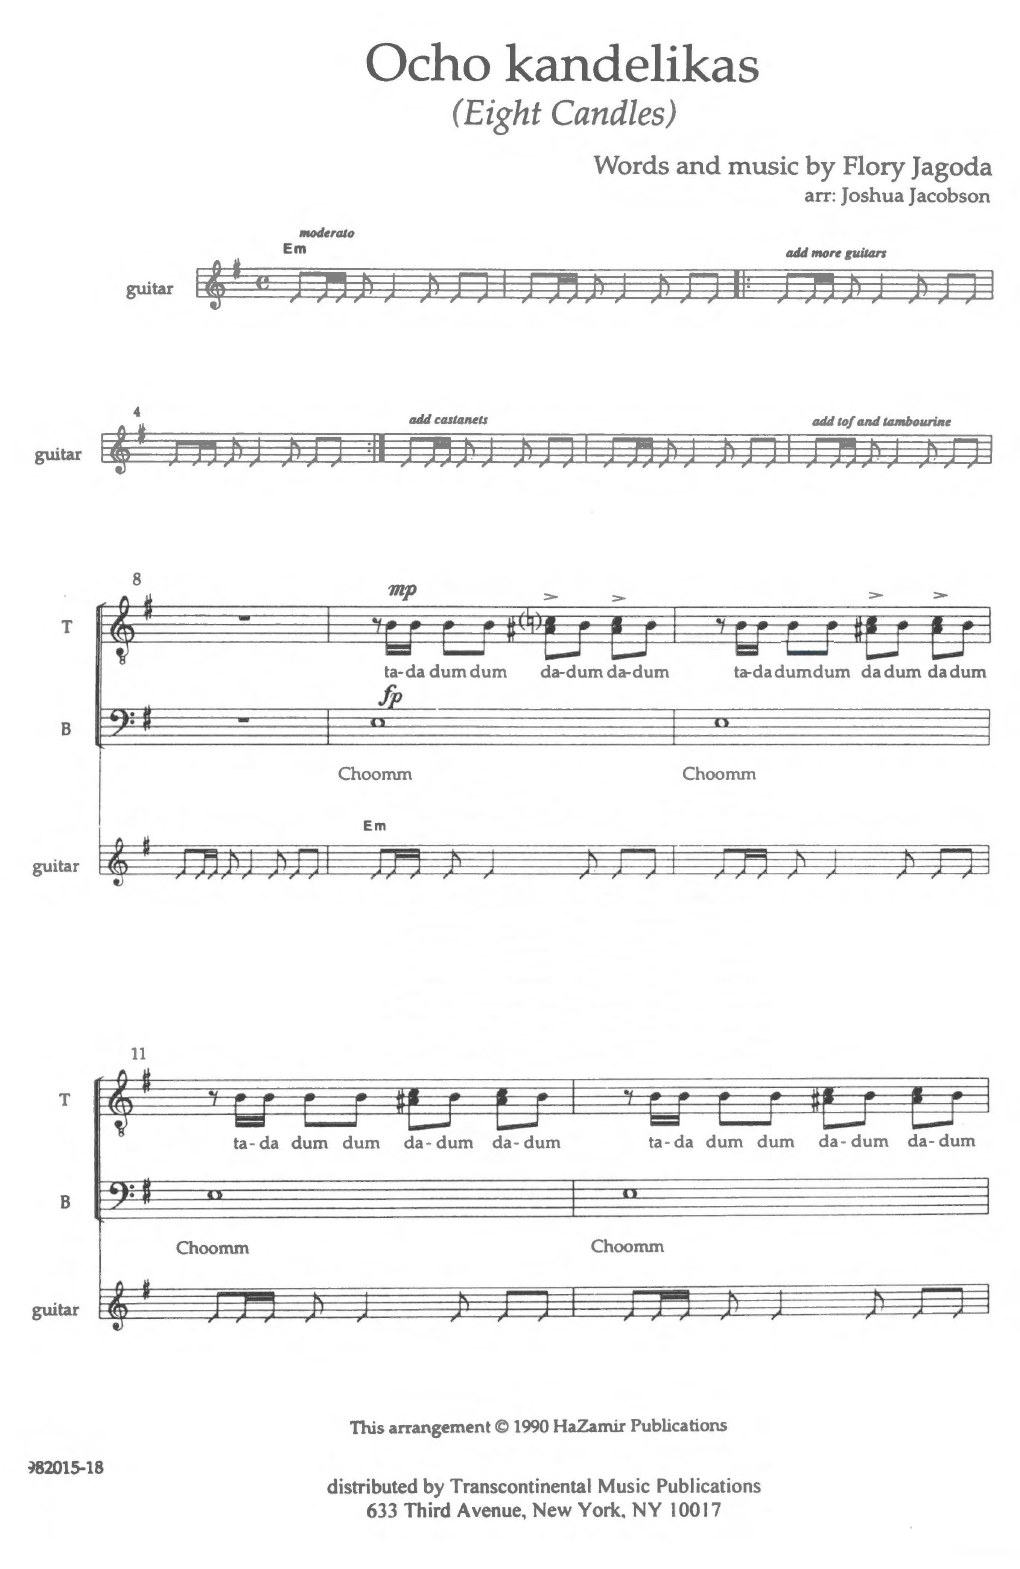 Download Joshua Jacobson Ocho Kandelikas (8 Candles) Sheet Music